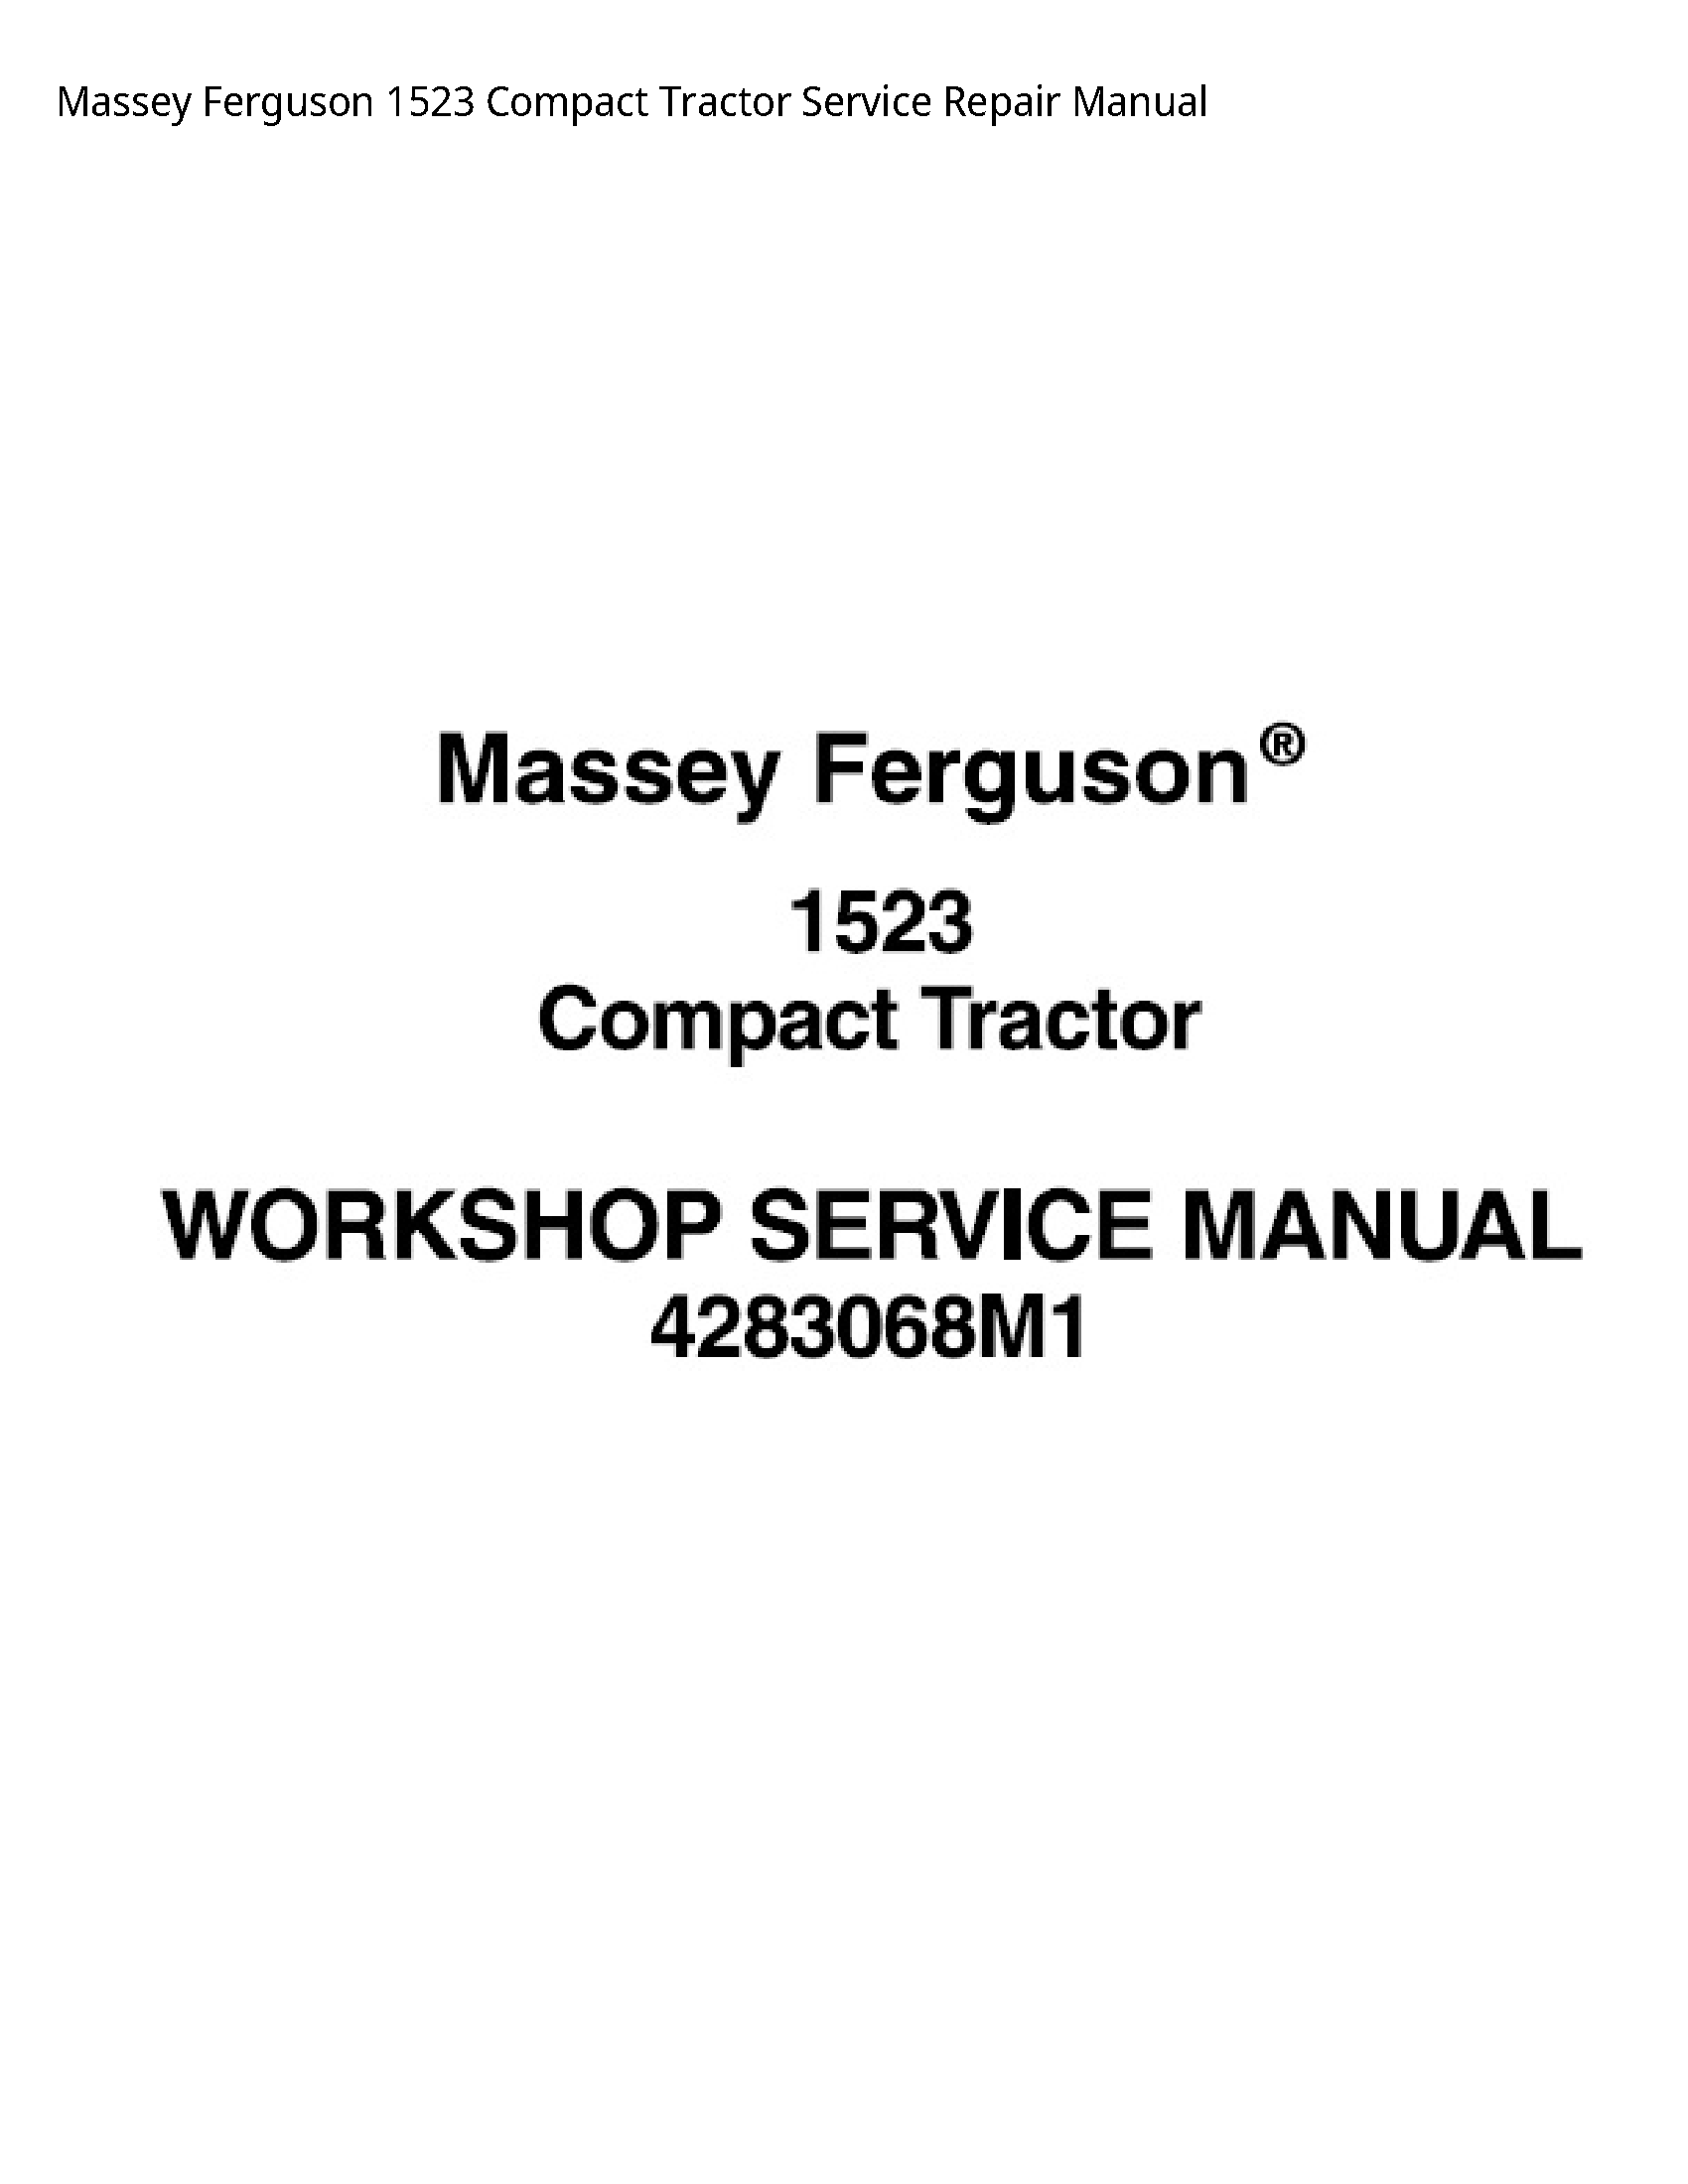 Massey Ferguson 1523 Compact Tractor manual